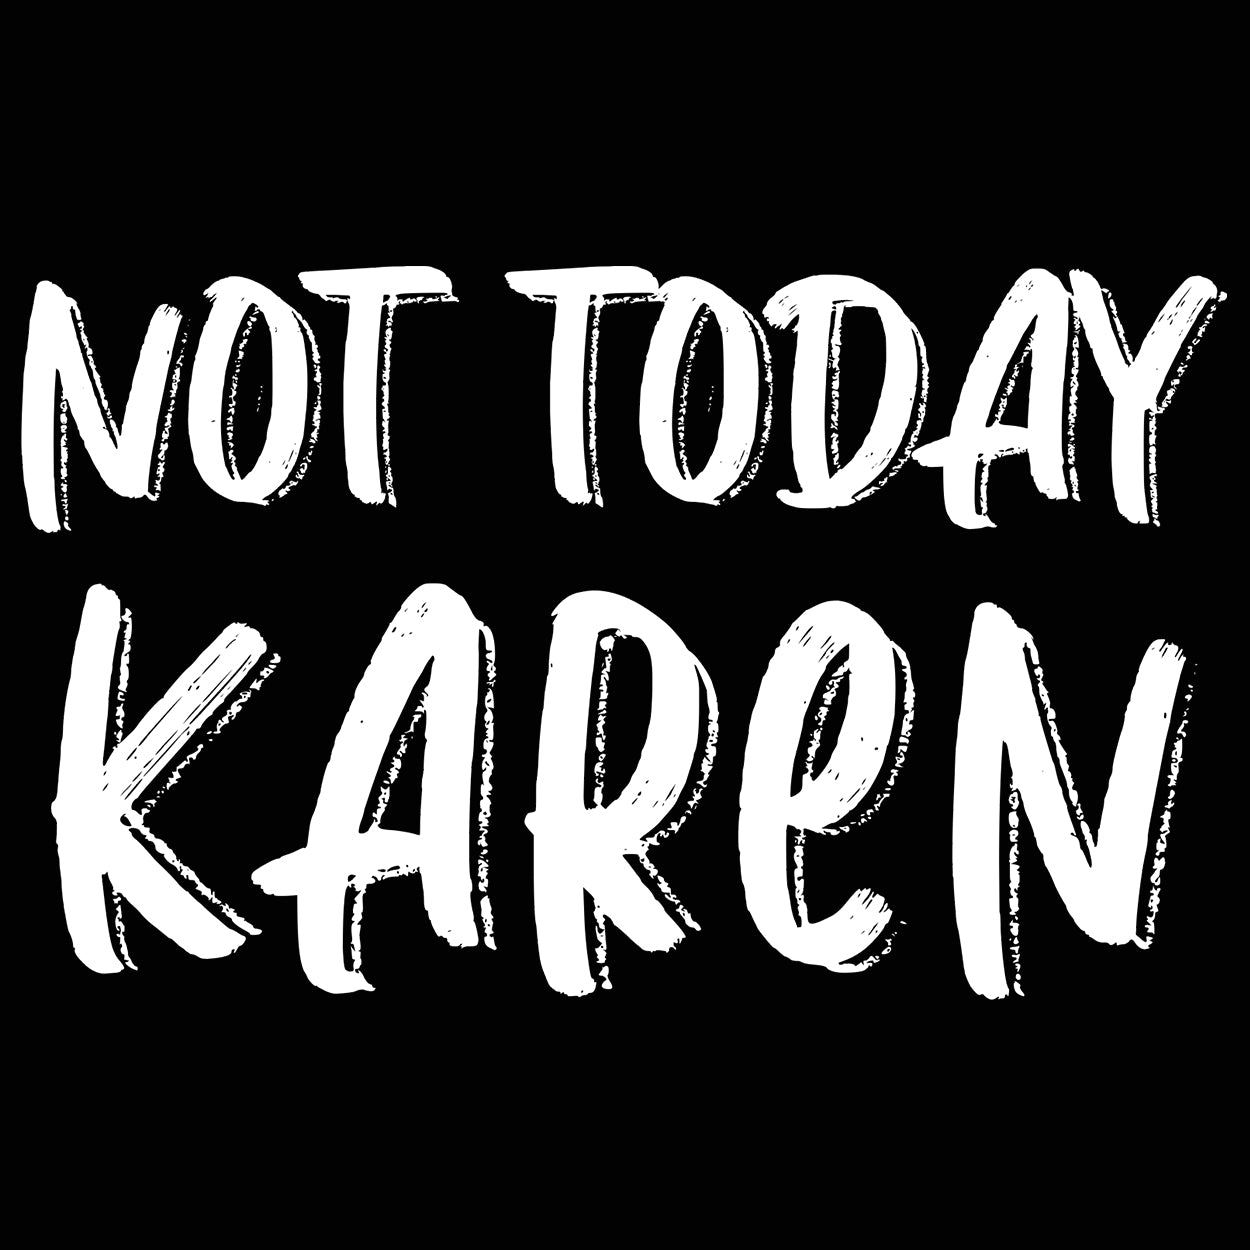 Not Today Karen Tshirt - Donkey Tees